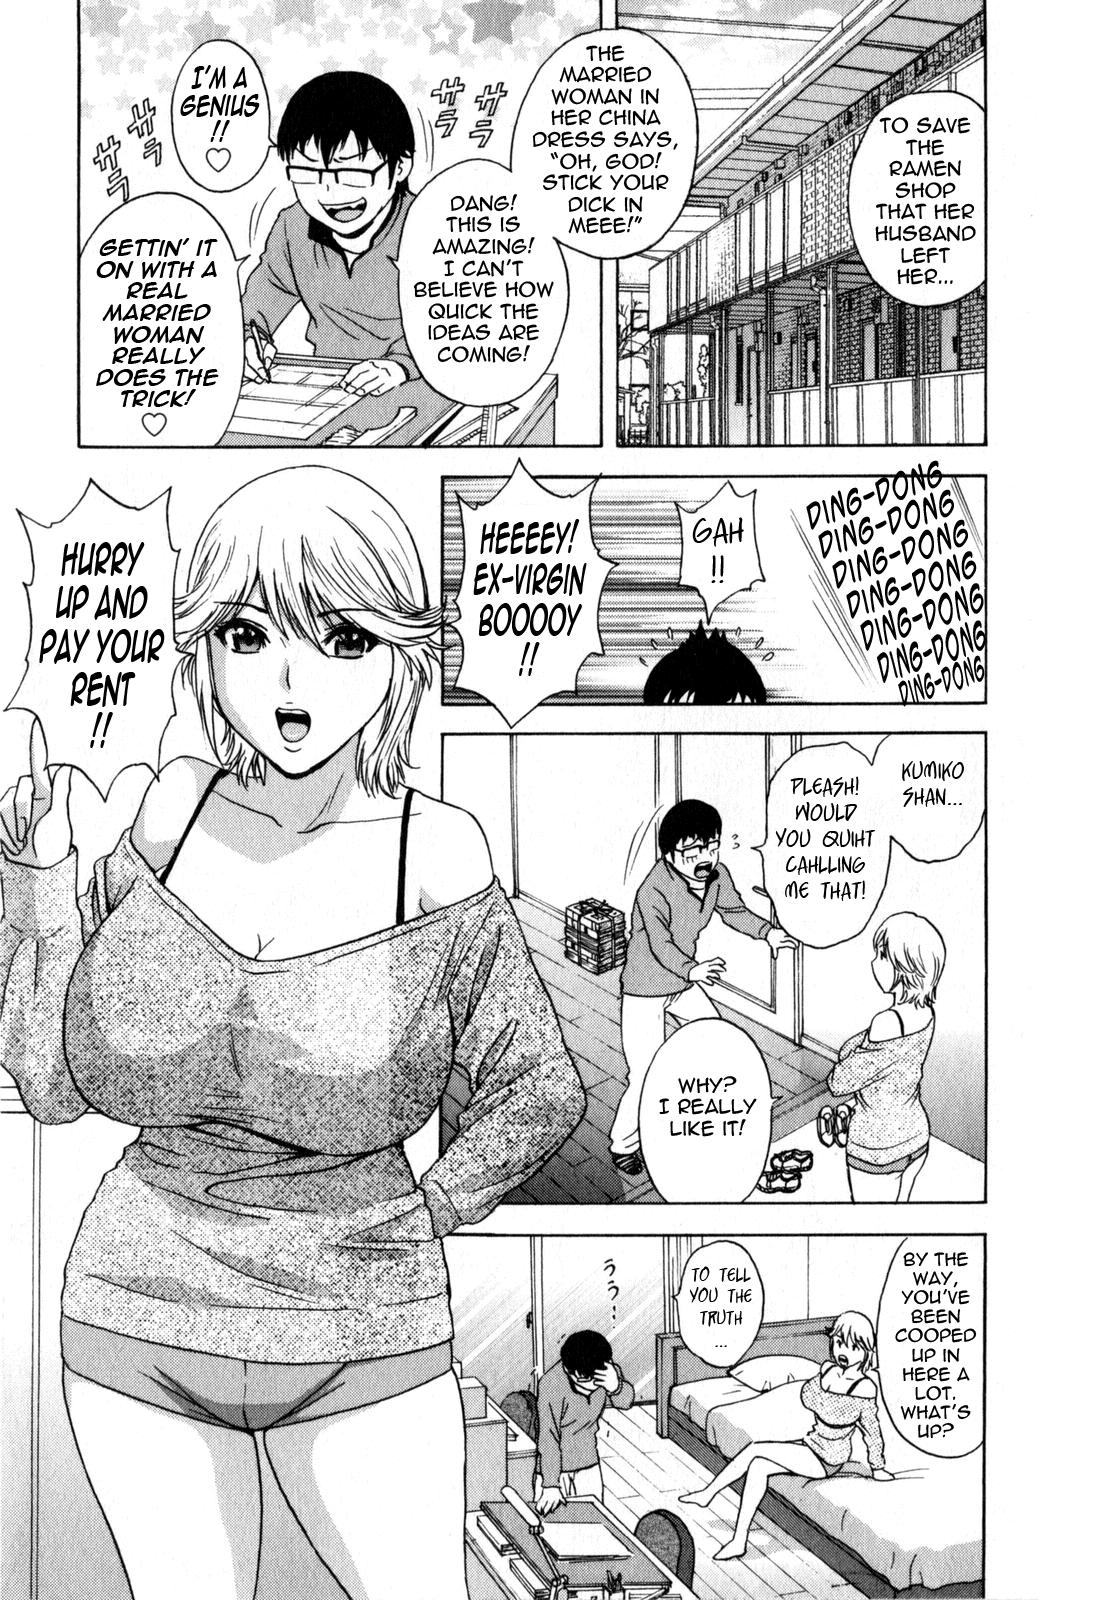 [Hidemaru] Life with Married Women Just Like a Manga 2 - Ch. 1-5 [English] {Tadanohito} 58